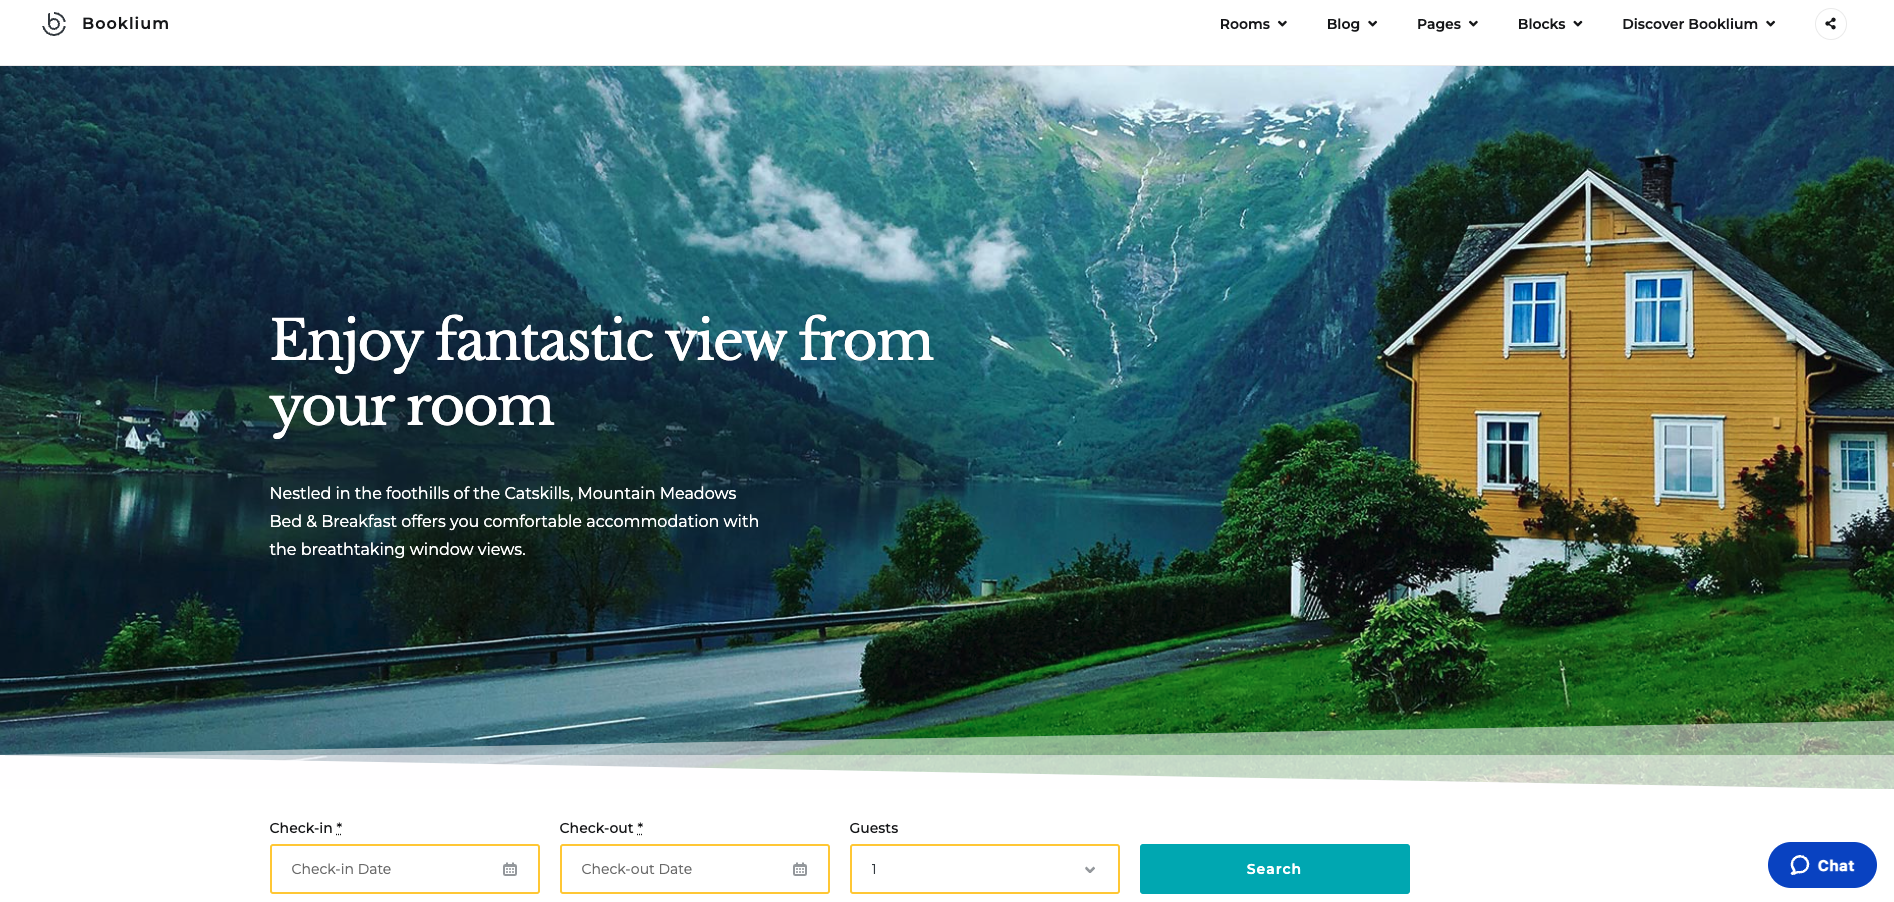 Booklium website templates for short-term vacation rentals